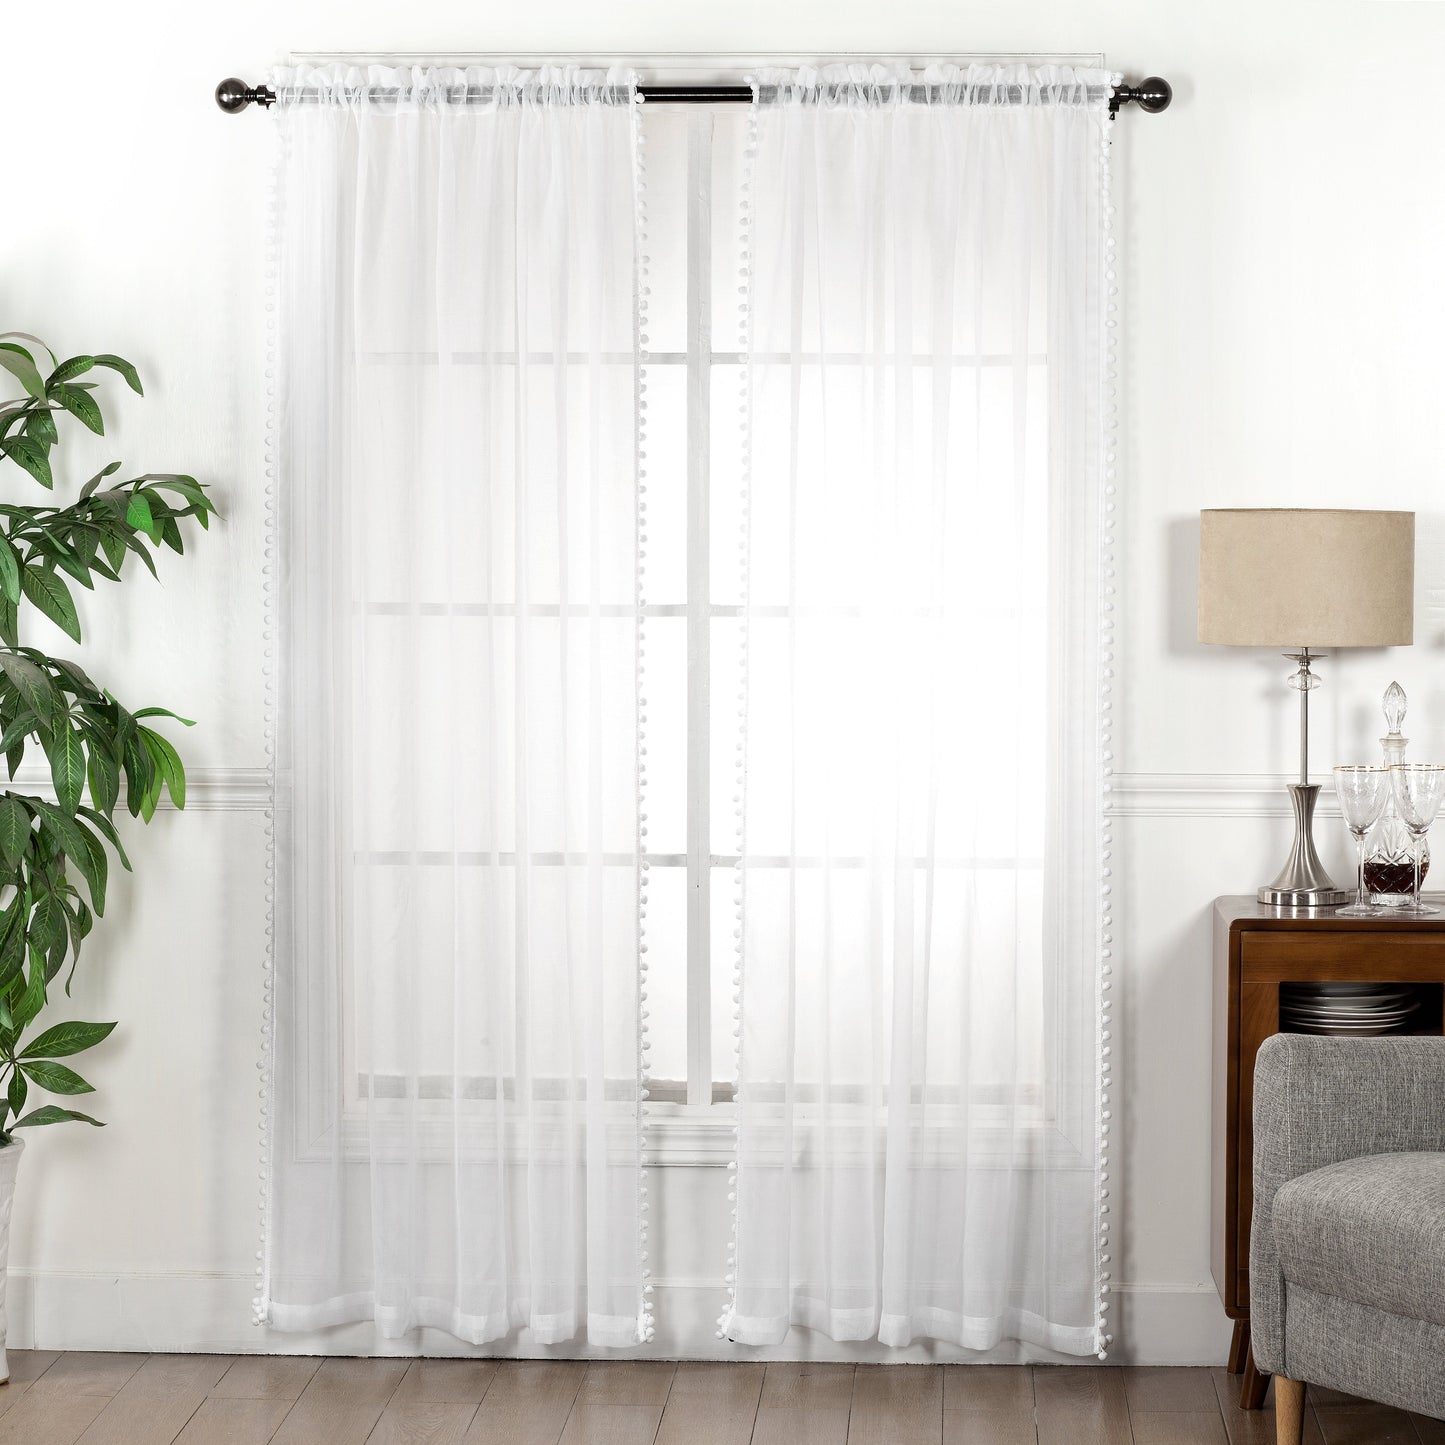 Elegant Comfort Set of 2 Pom Pom Tasseled Sheer Curtain - Rod Pocket